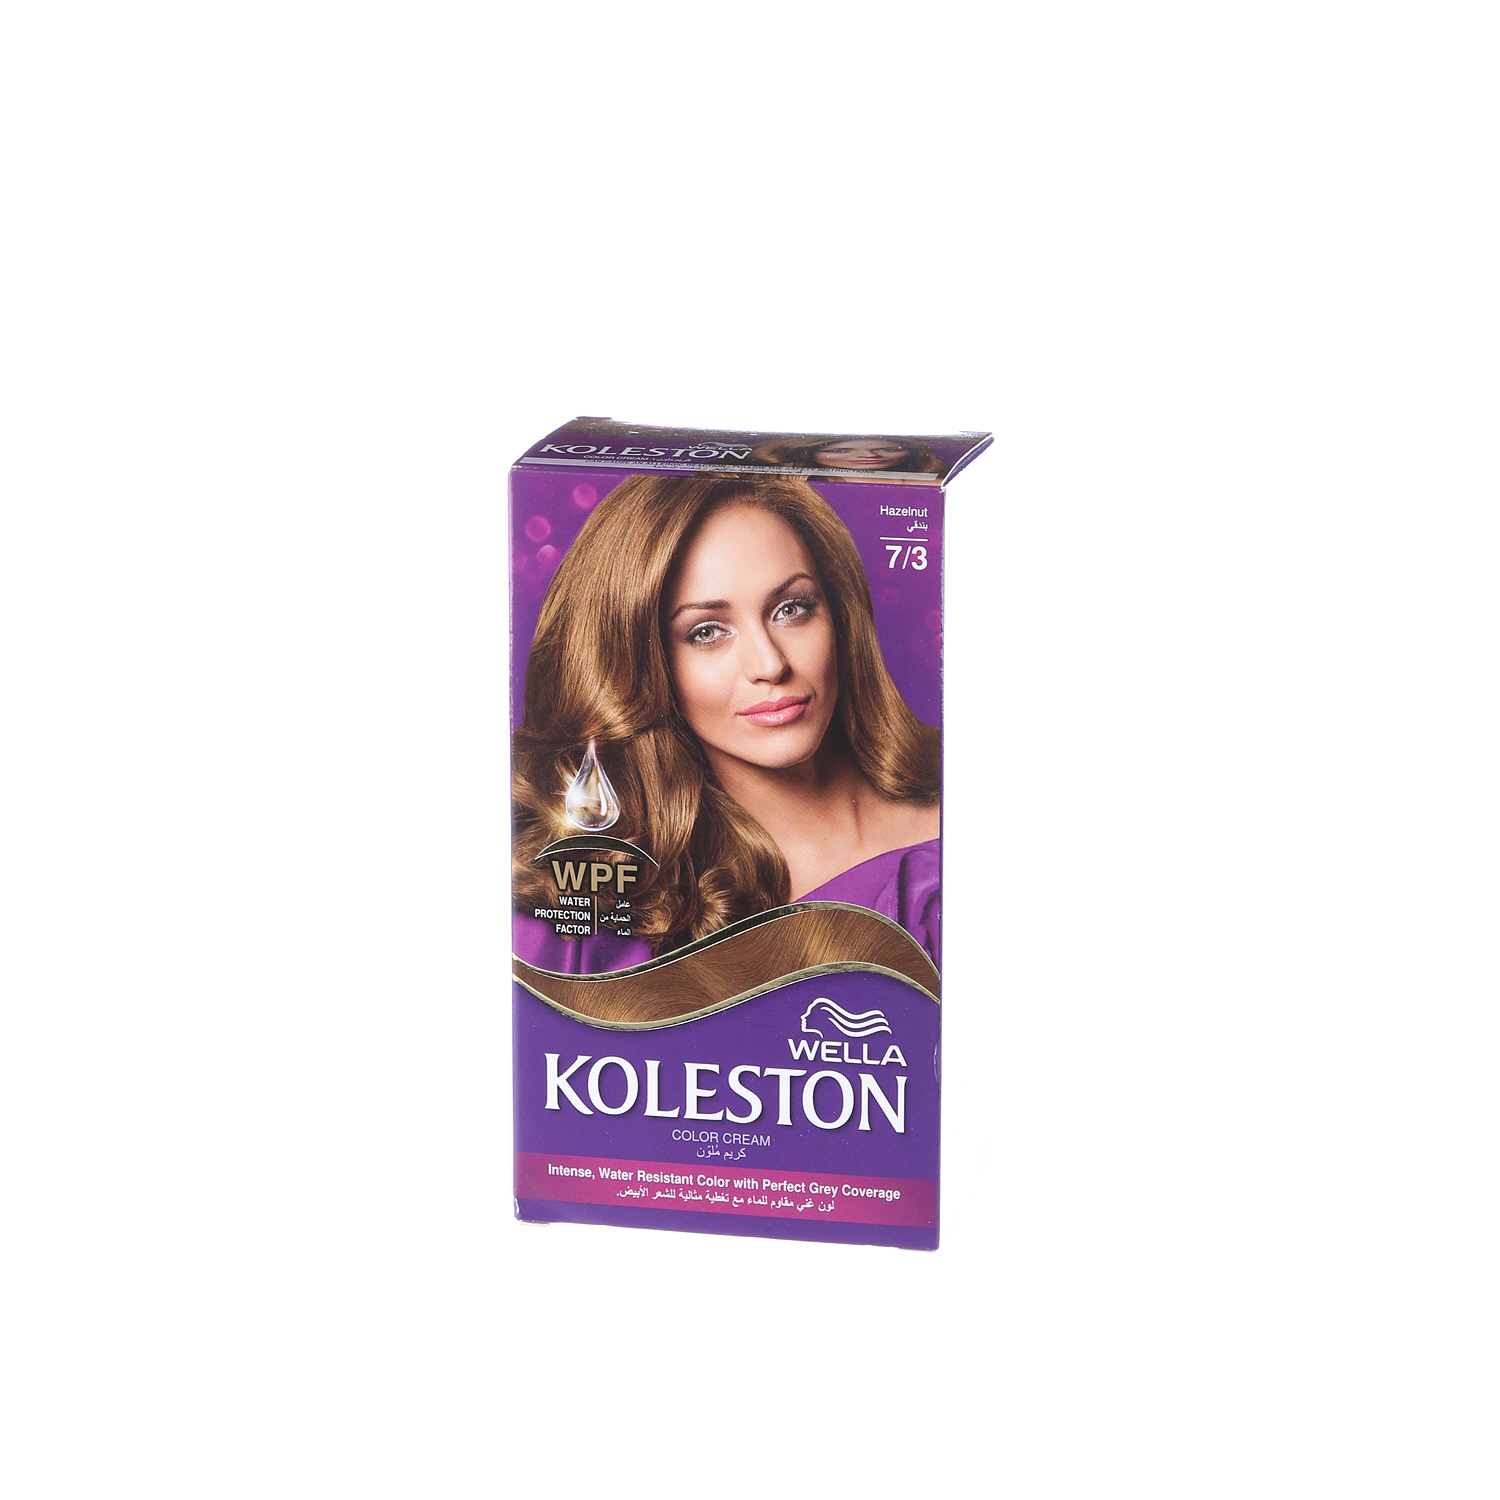 Wella Koleston Supreme Hair Color 7/3 Dazzling Hazelnut